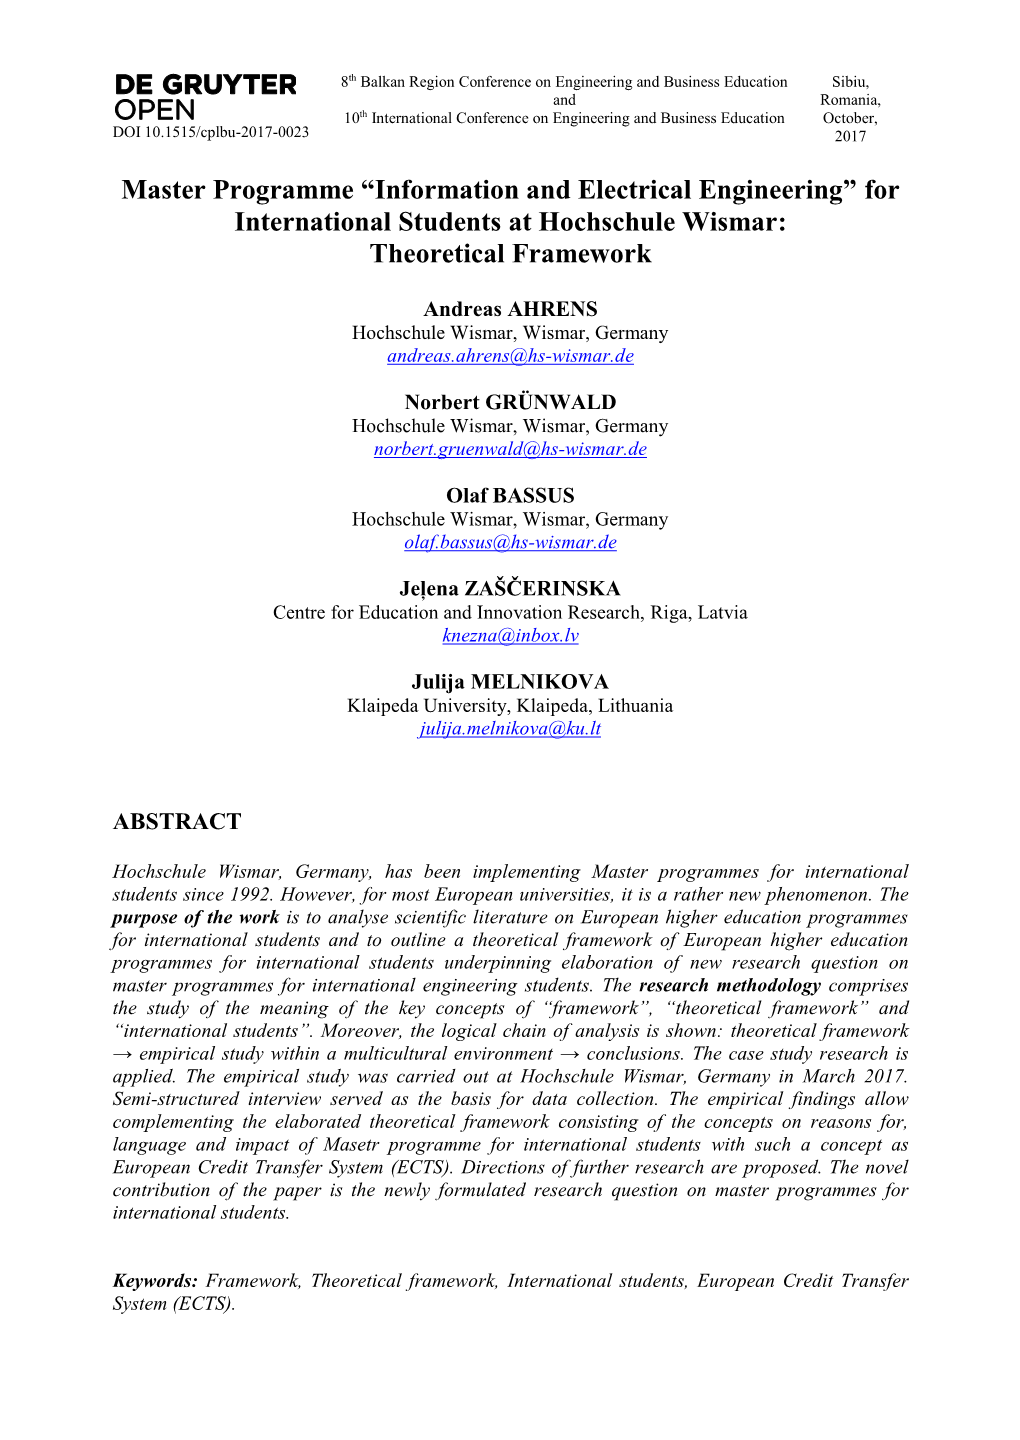 For International Students at Hochschule Wismar: Theoretical Framework